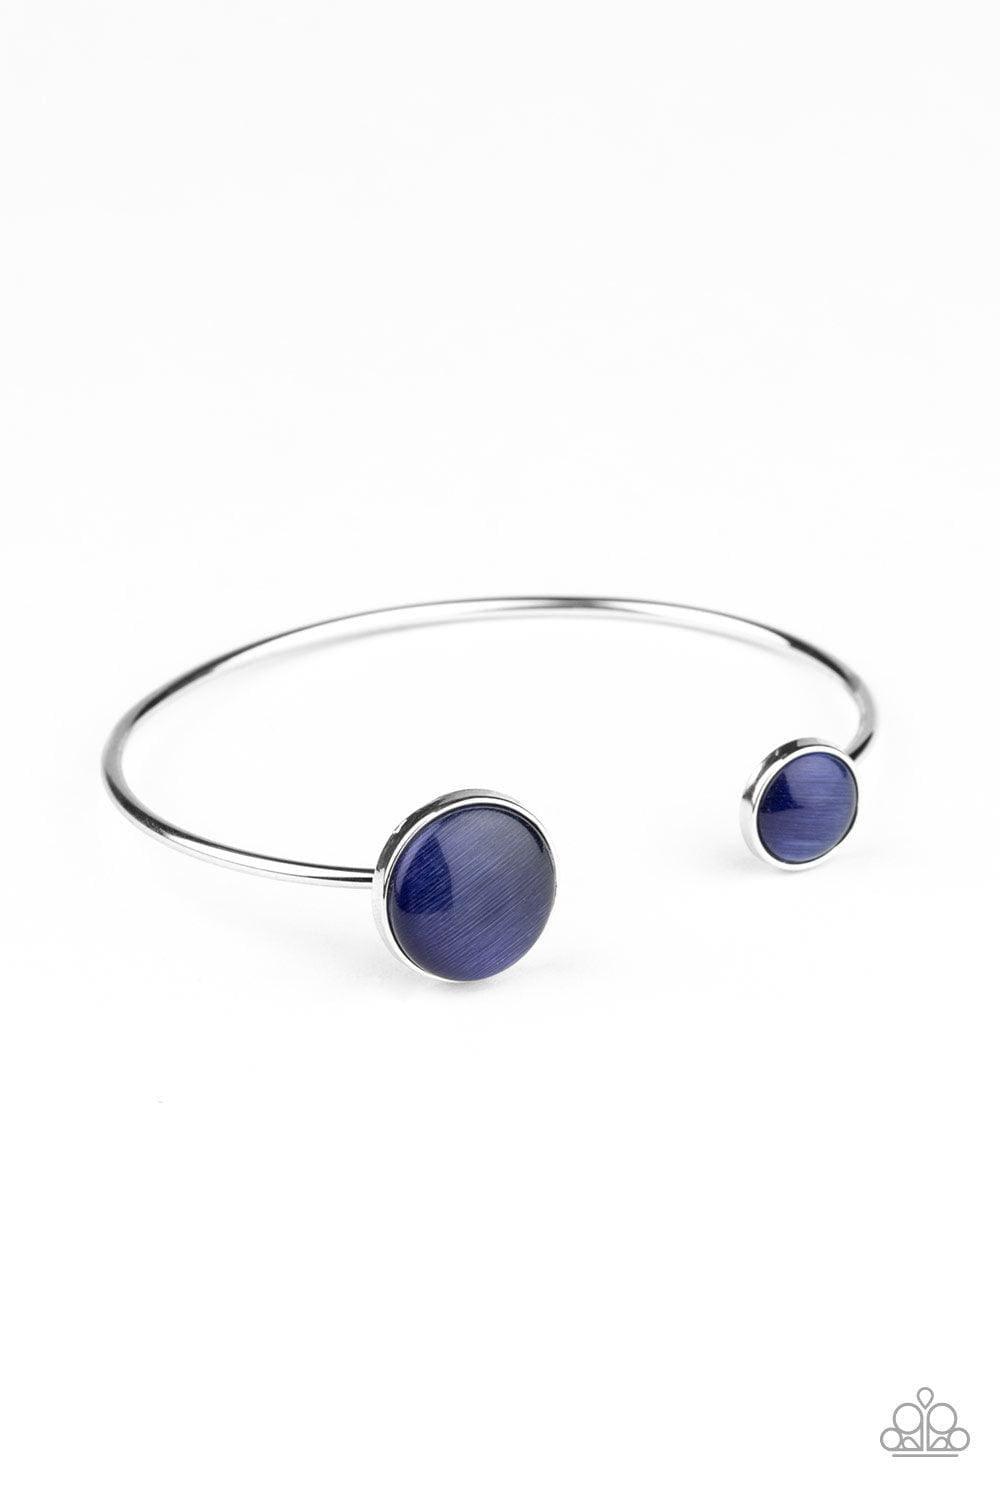 Paparazzi Accessories - Brilliantly Basic - Blue Bracelet - Bling by JessieK